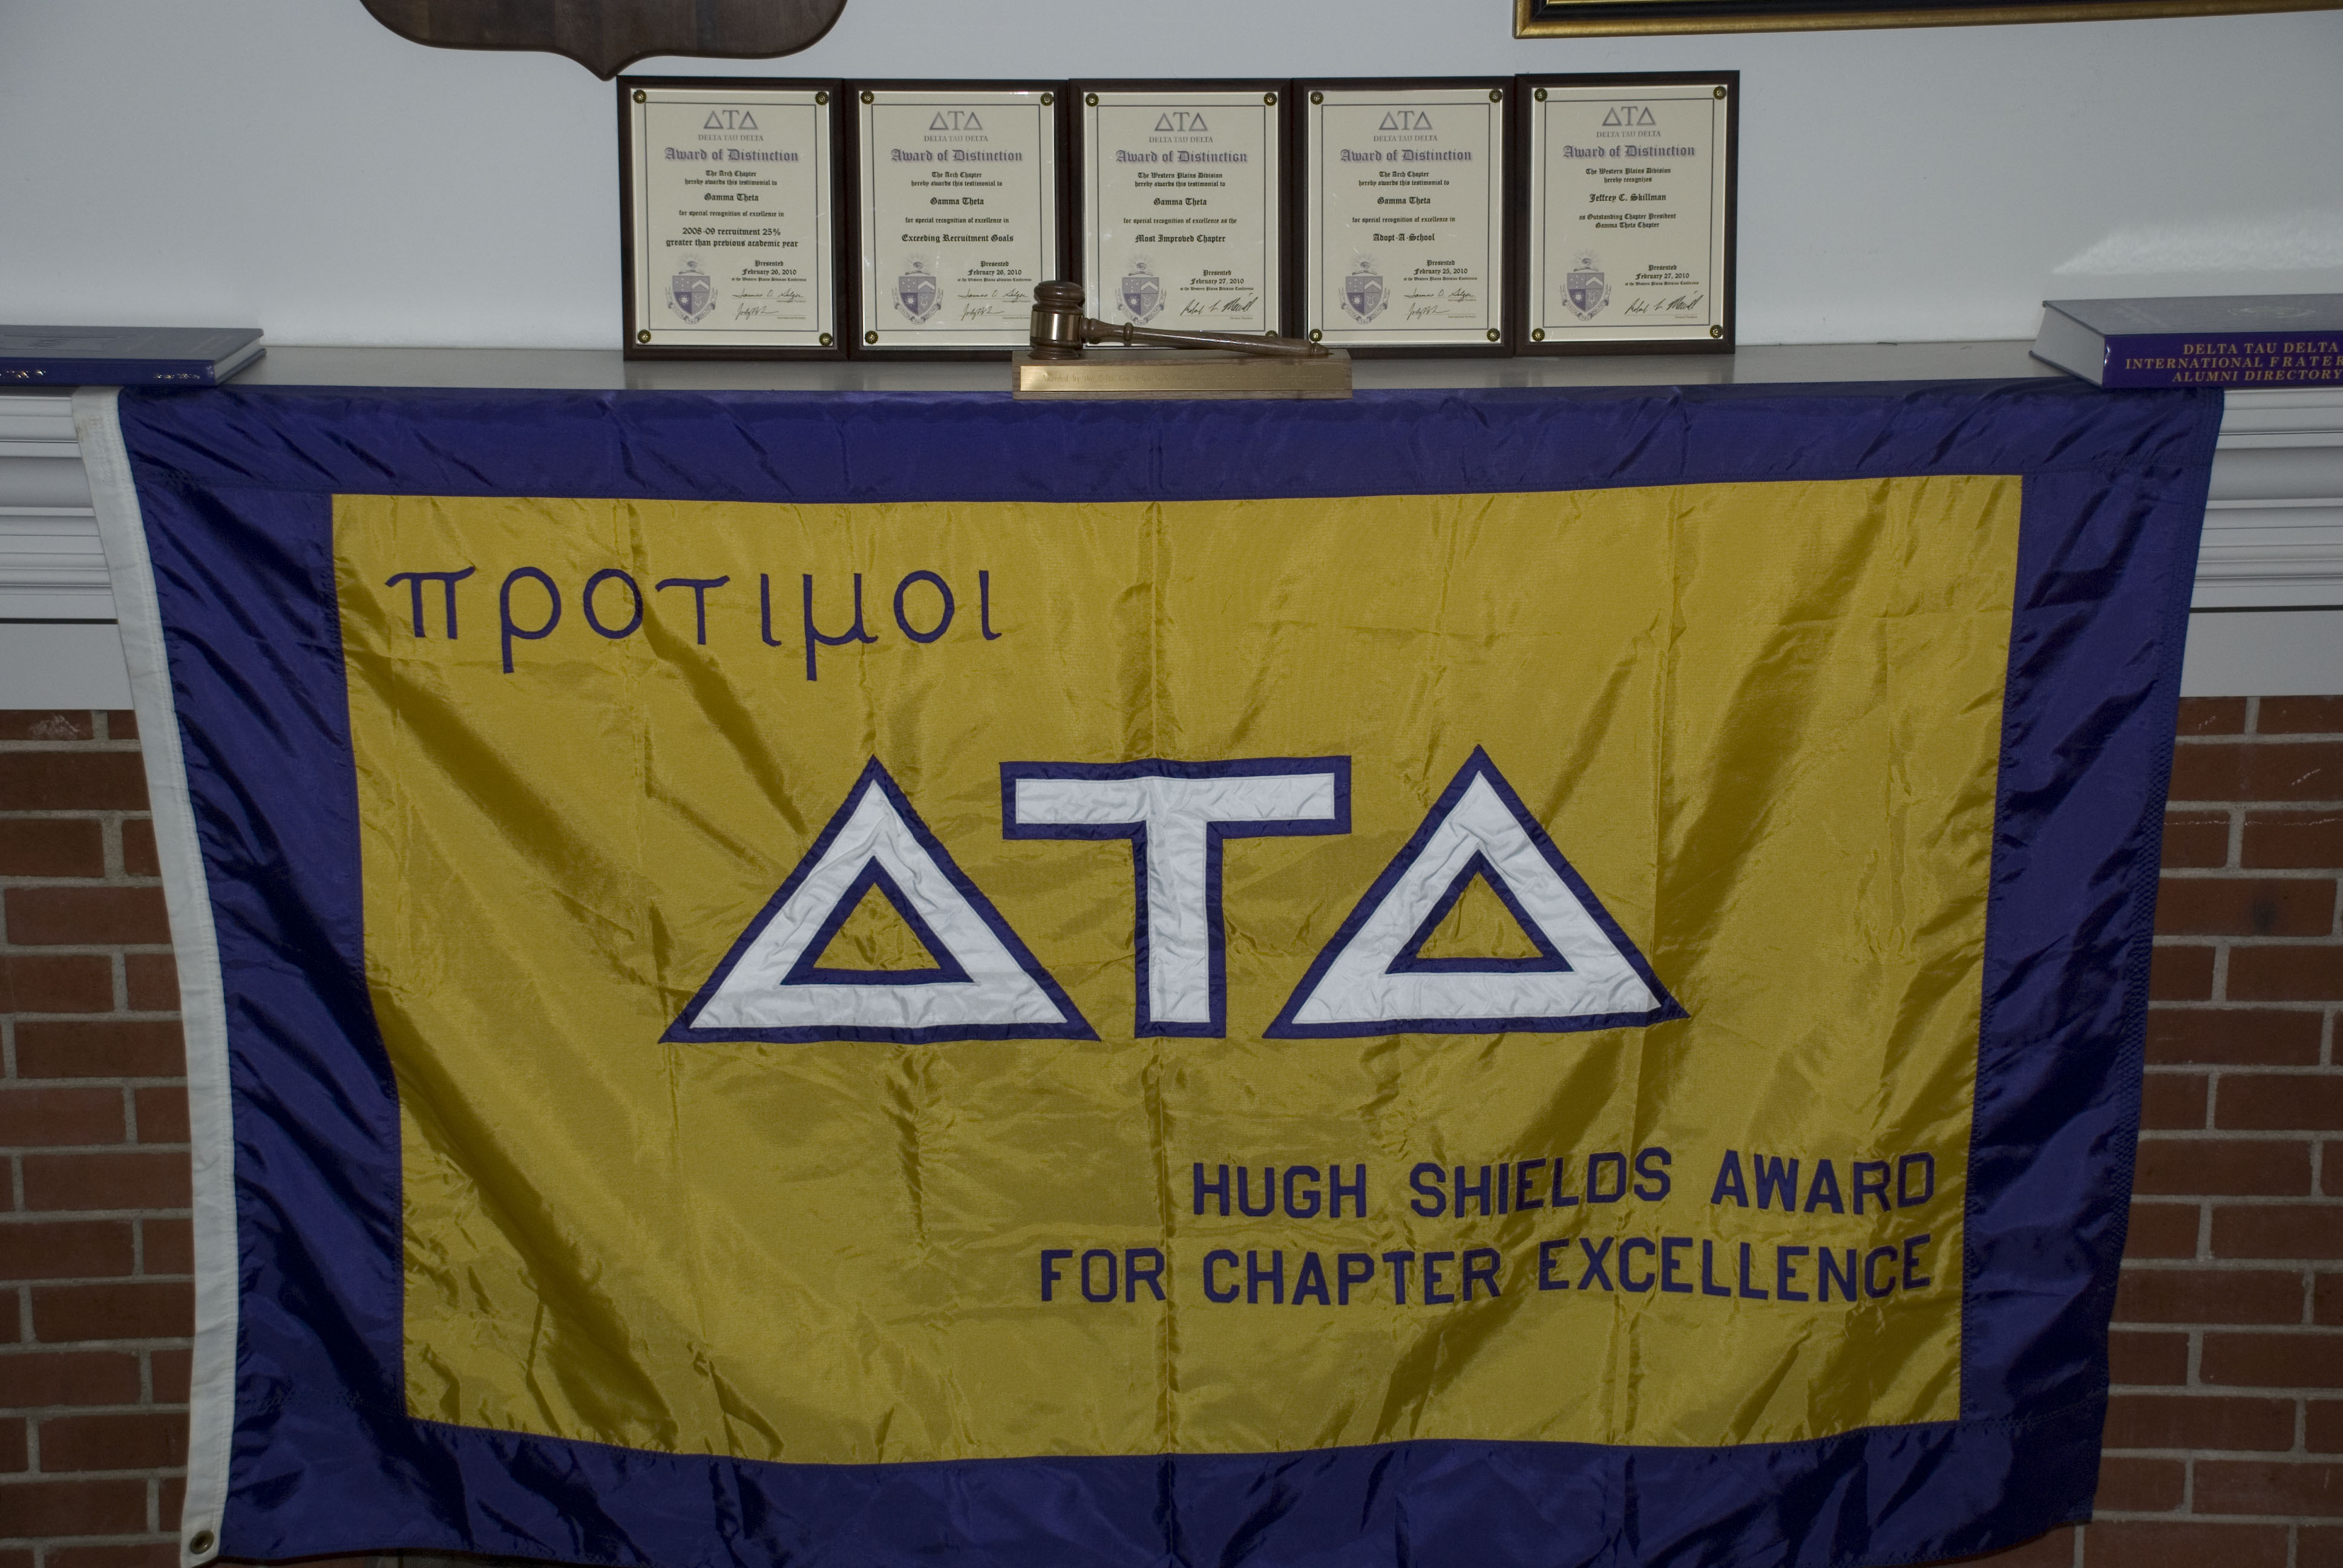 Image result for hugh shields award